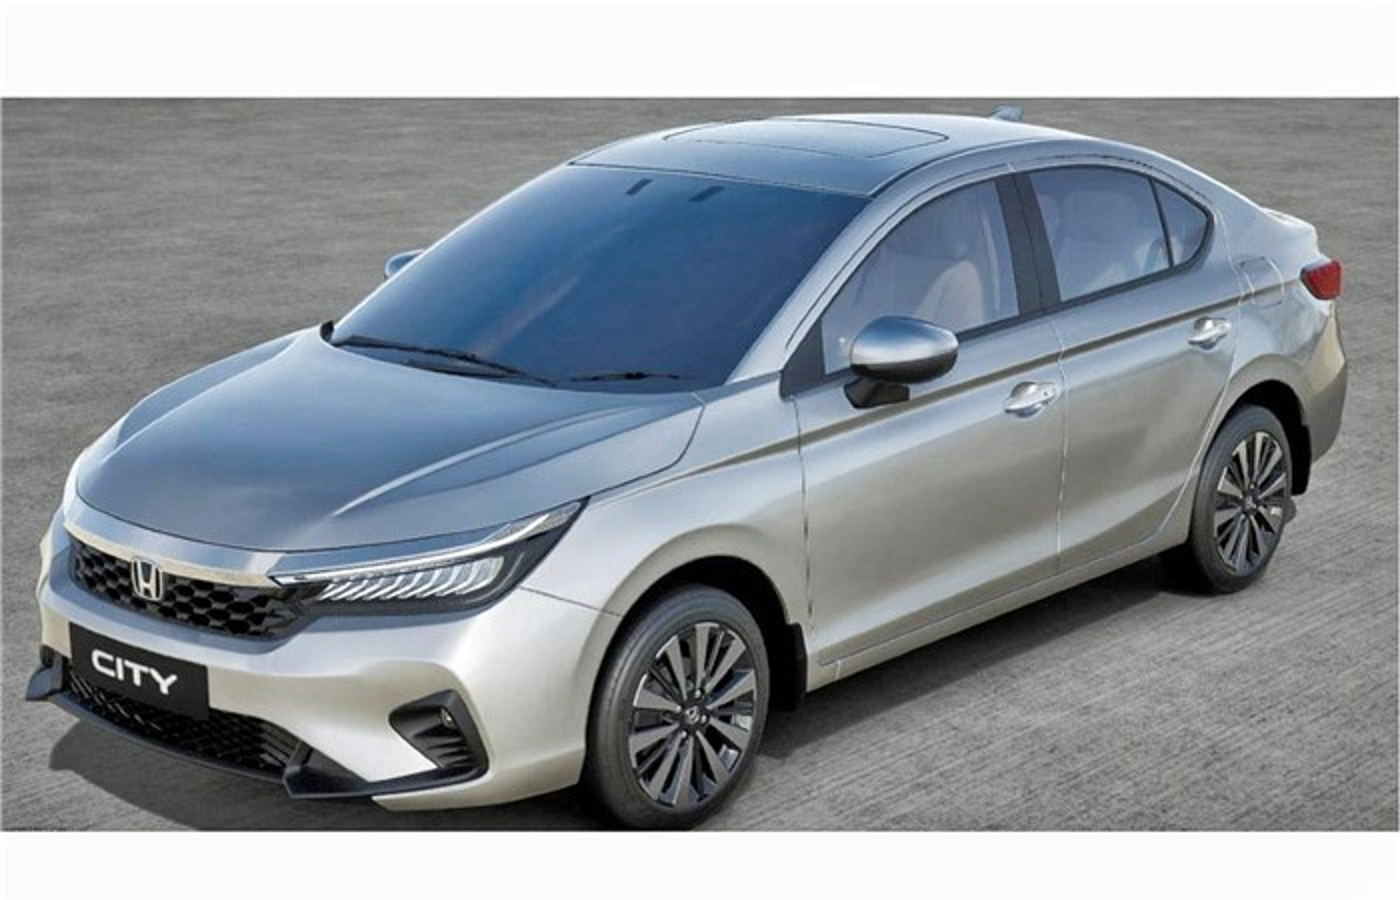 Honda City facelift variant details Autocar India